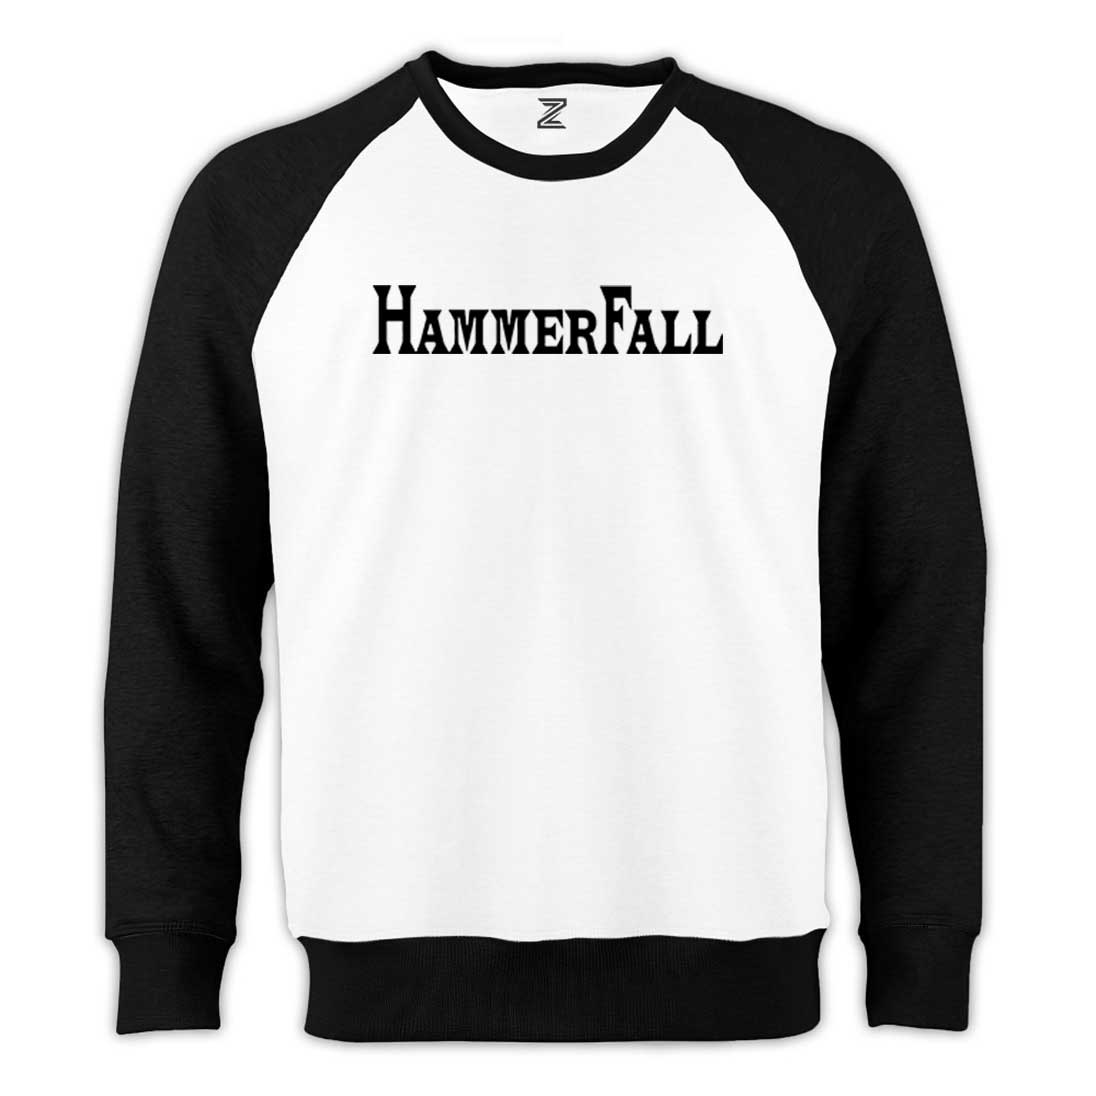 Hammerfall Text Reglan Kol Beyaz Sweatshirt